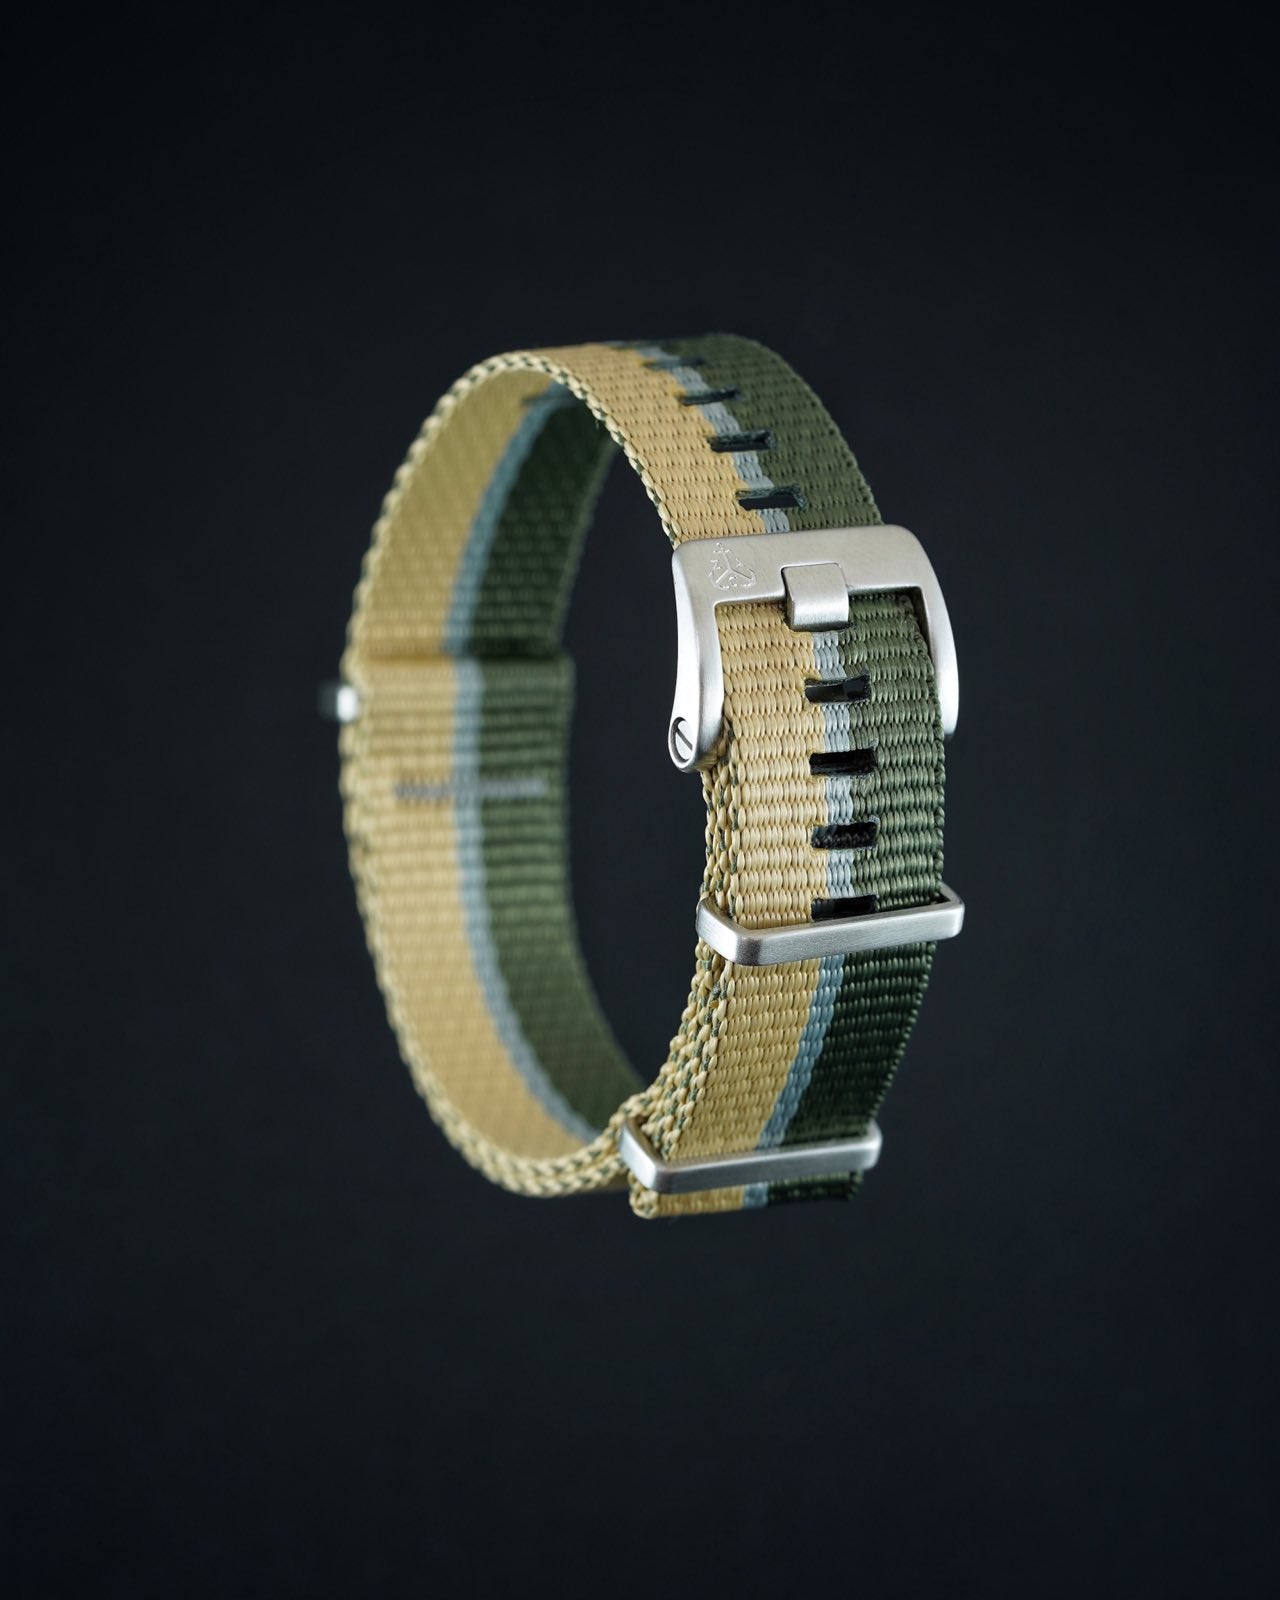 Rugged watch strap in light/dark green